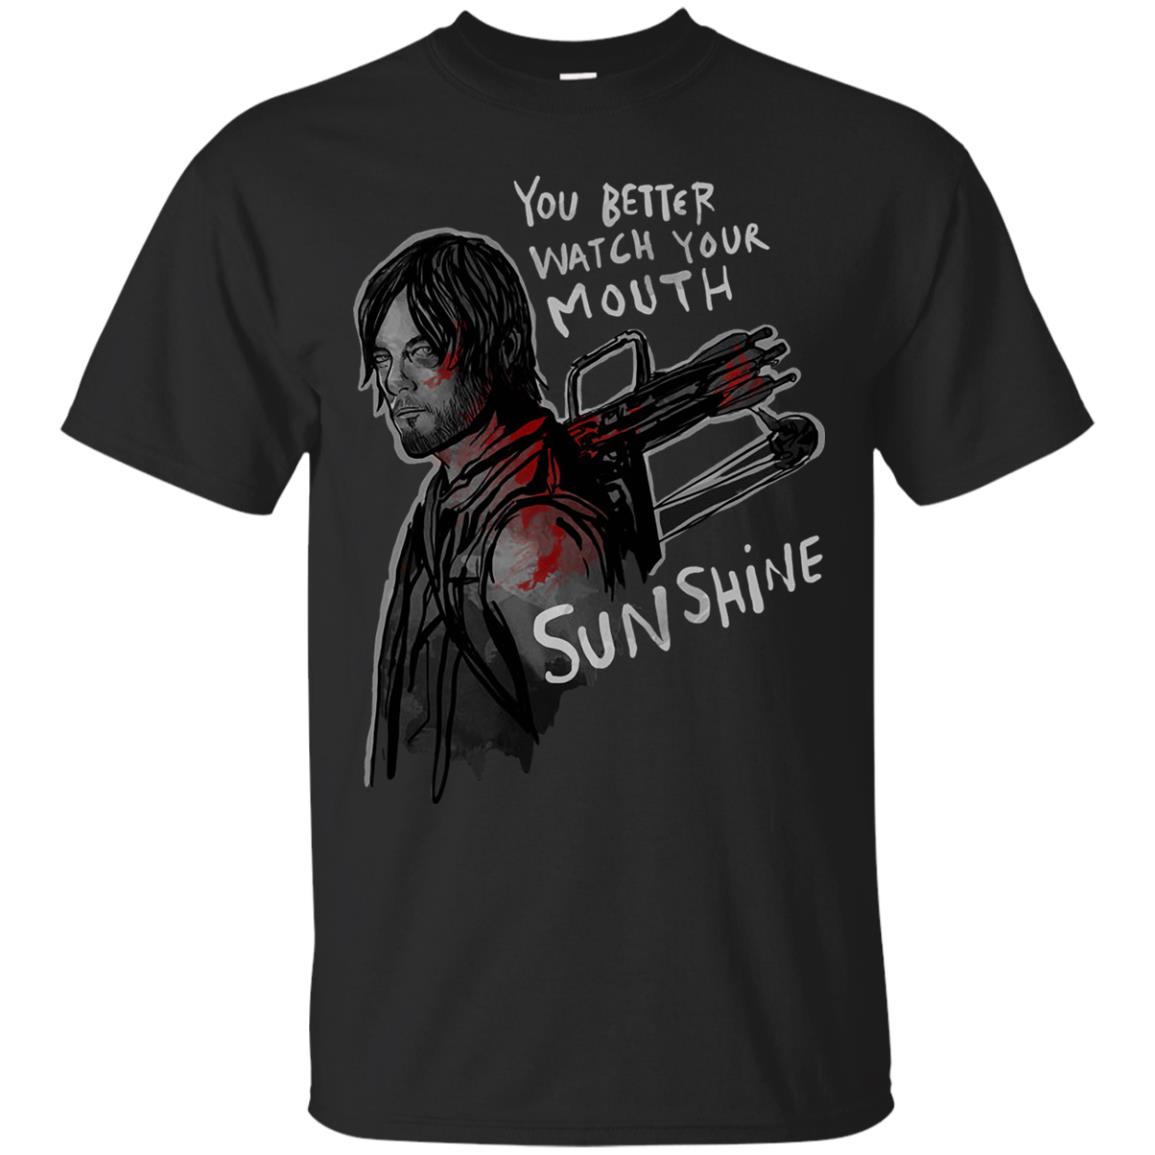 You Better Watch Your Mouth, Sunshine T-shirt - black